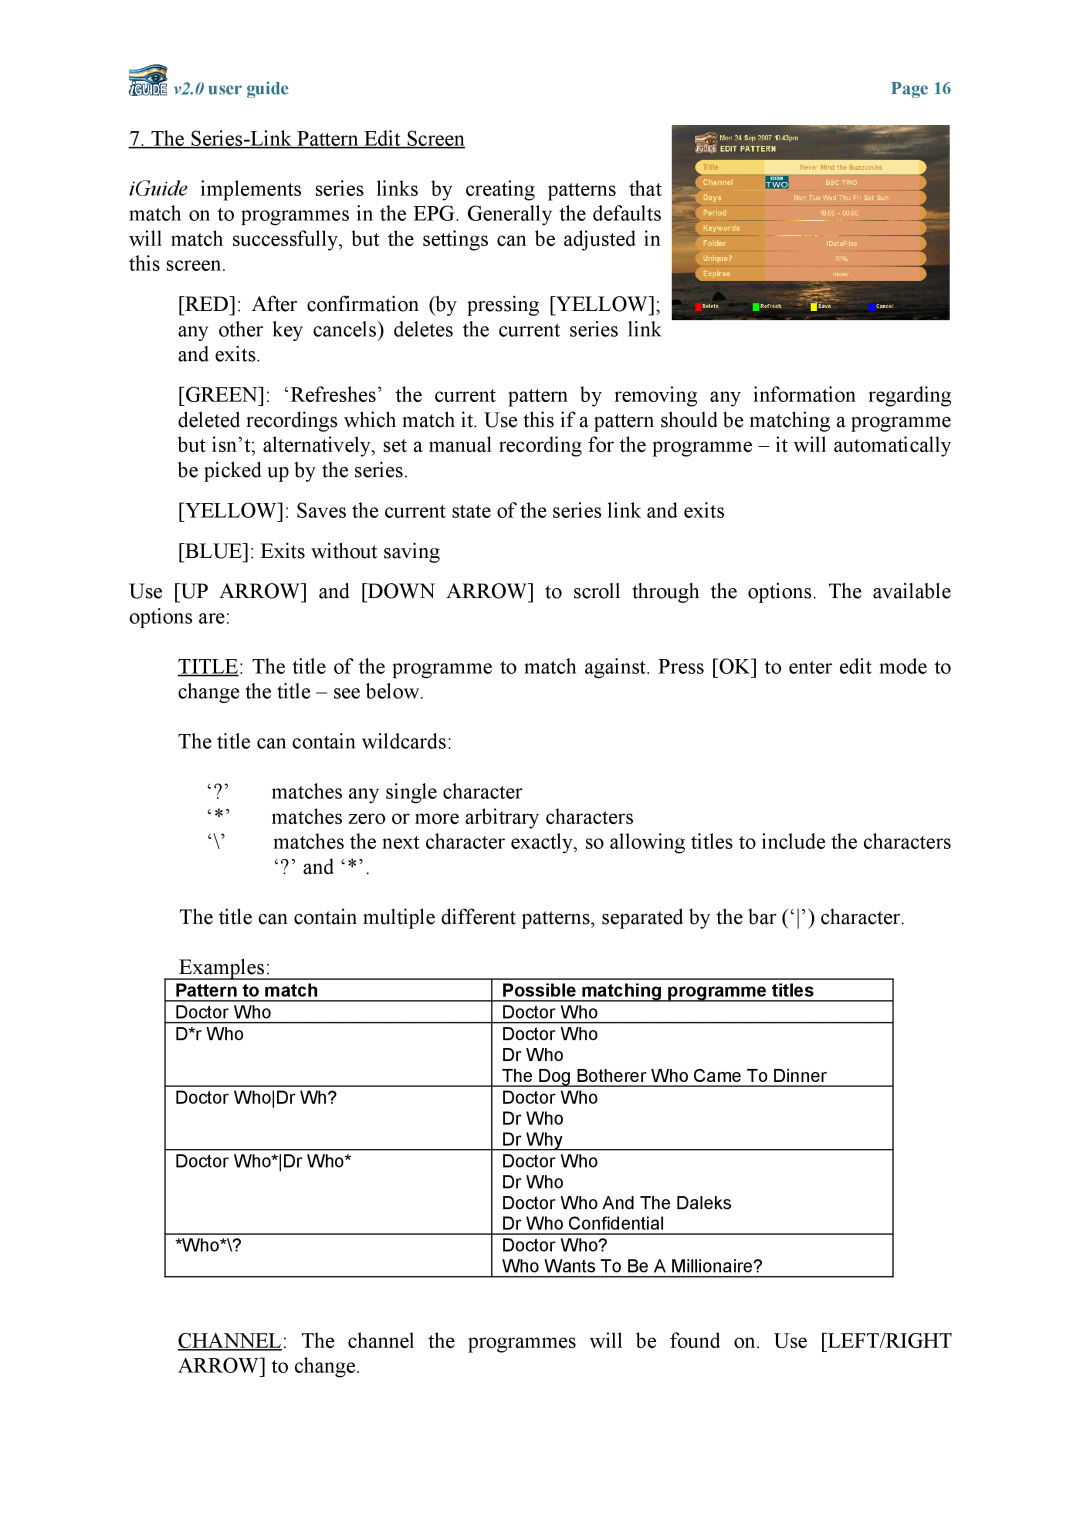 Topfield v2.0 manual The Series-LinkPattern Edit Screen 